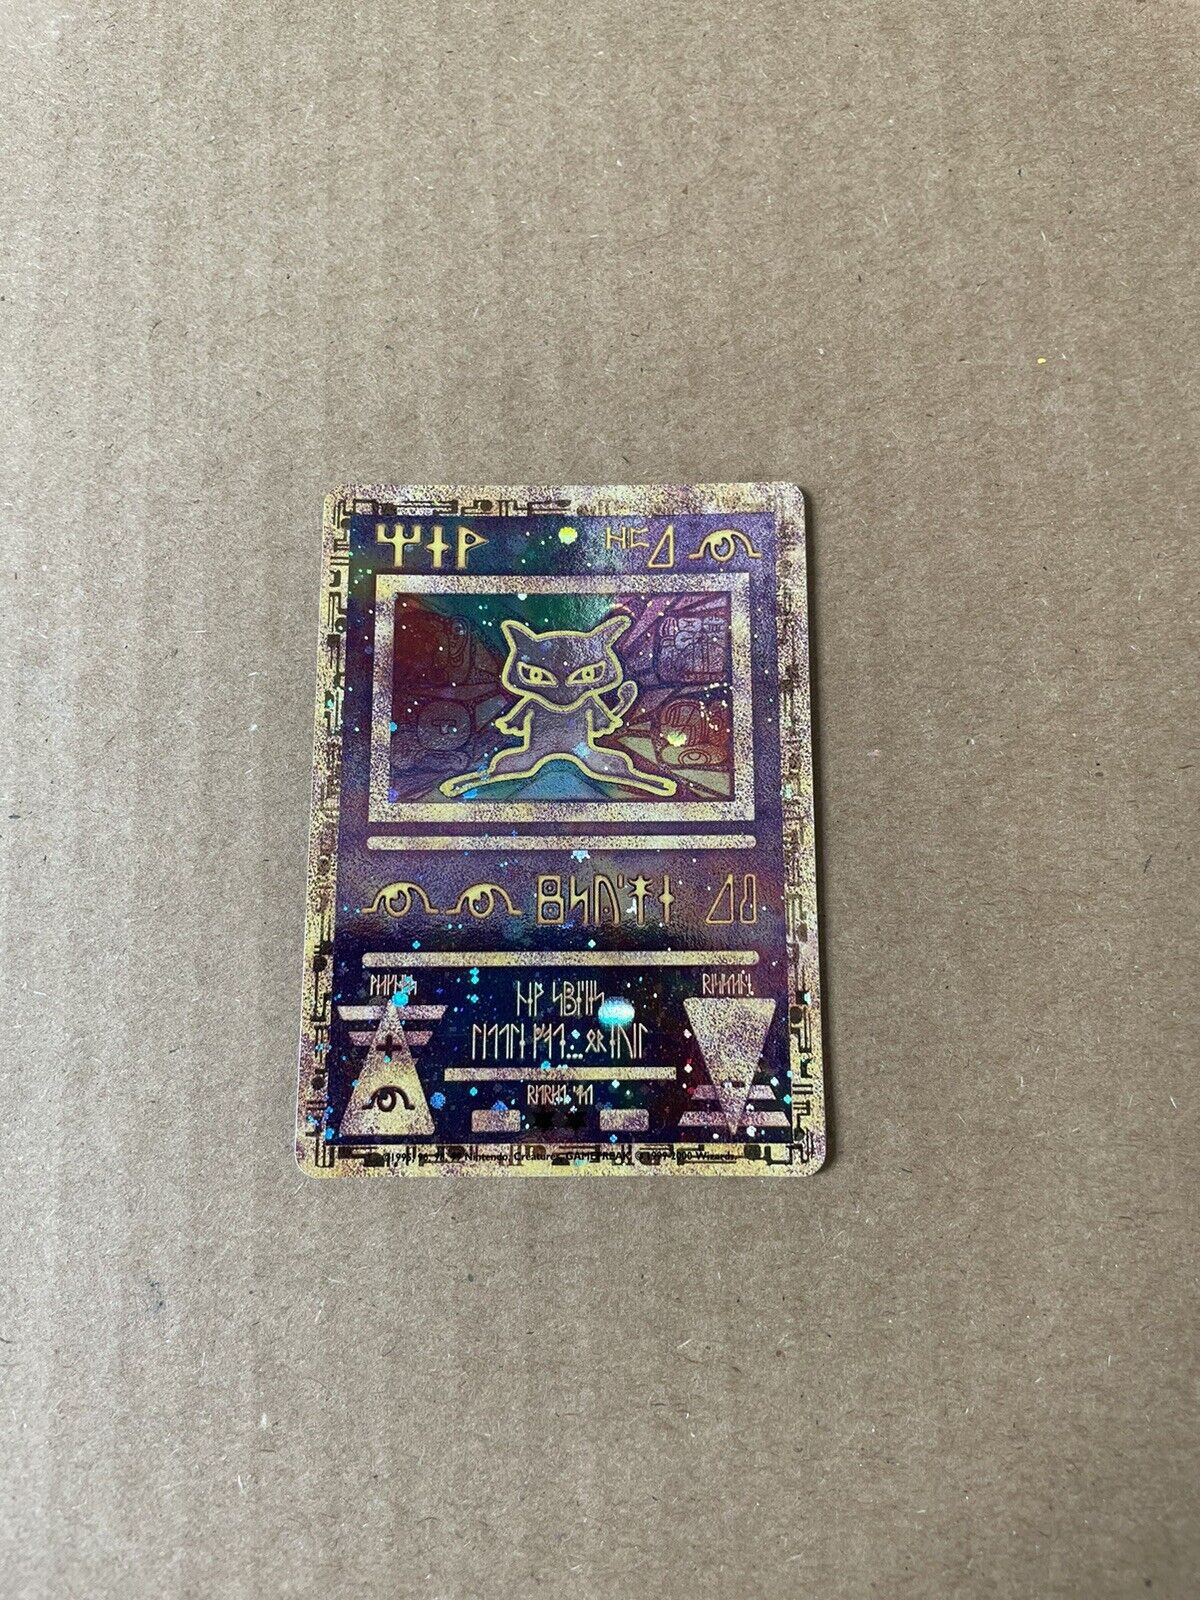 Pokémon TCG - Ancient Mew Promo 54 - Rare Holo (Near-Mint)